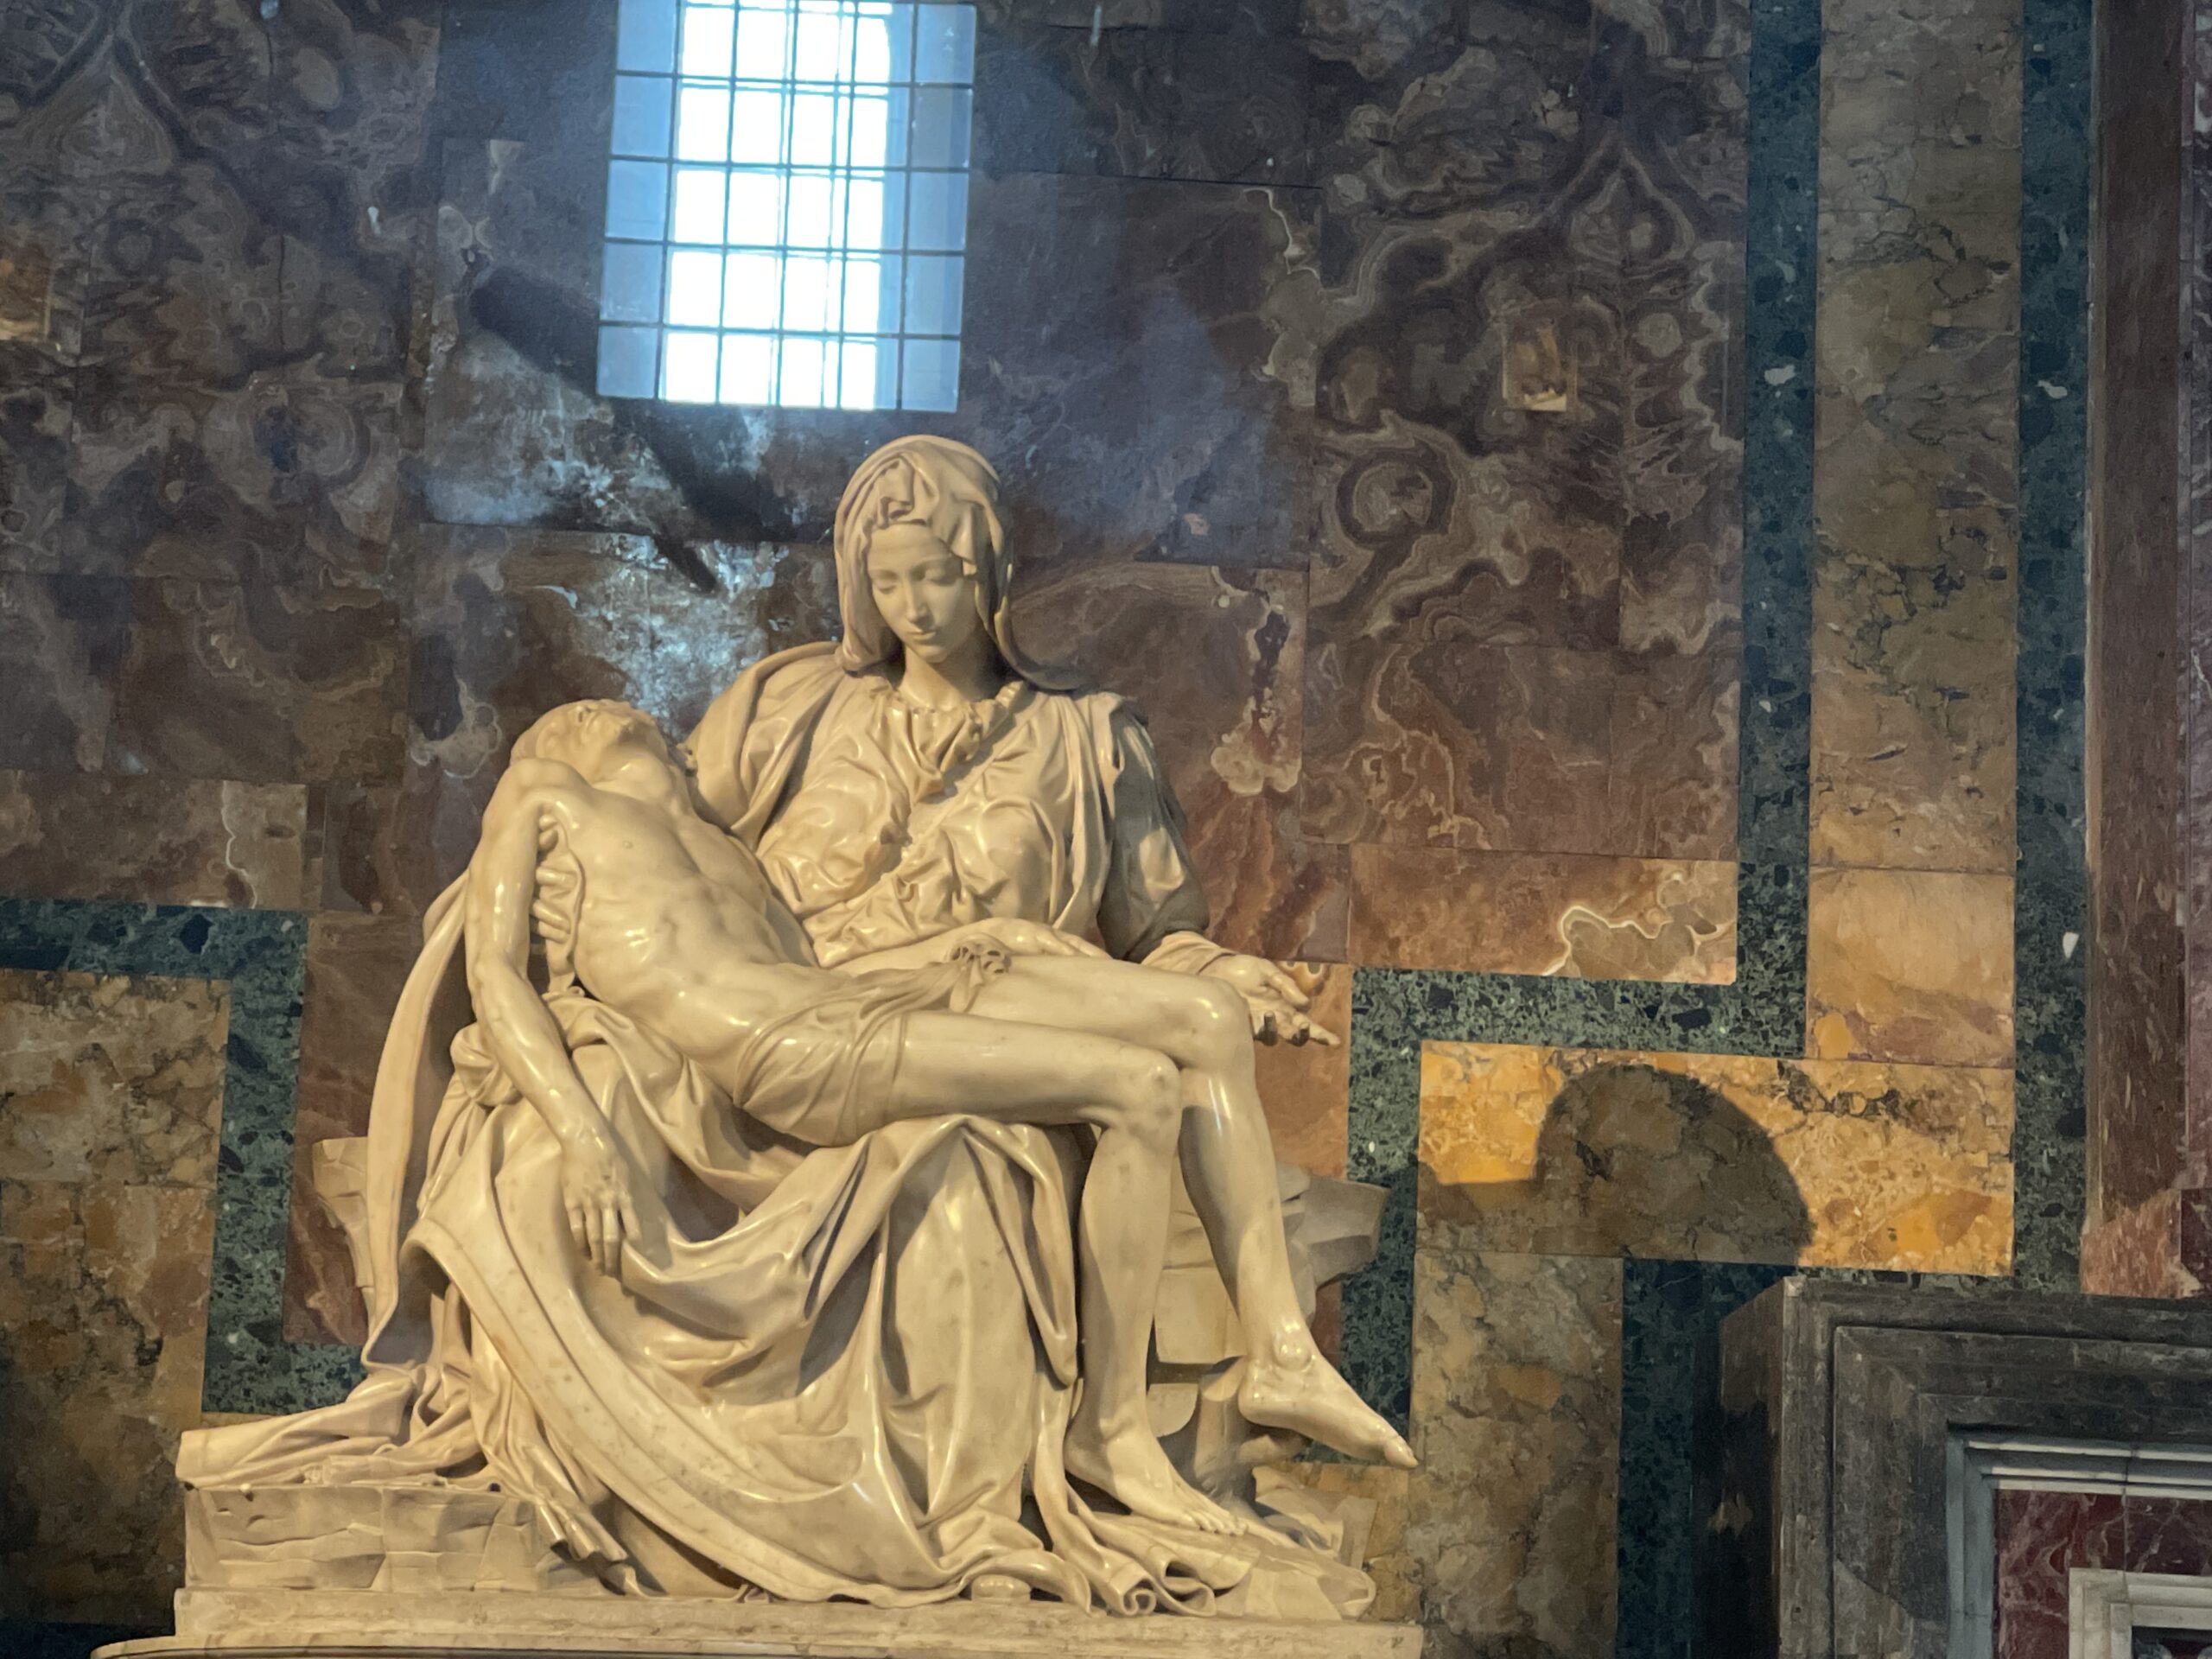 Michelangelo's Pietà in St Peter's Basilica